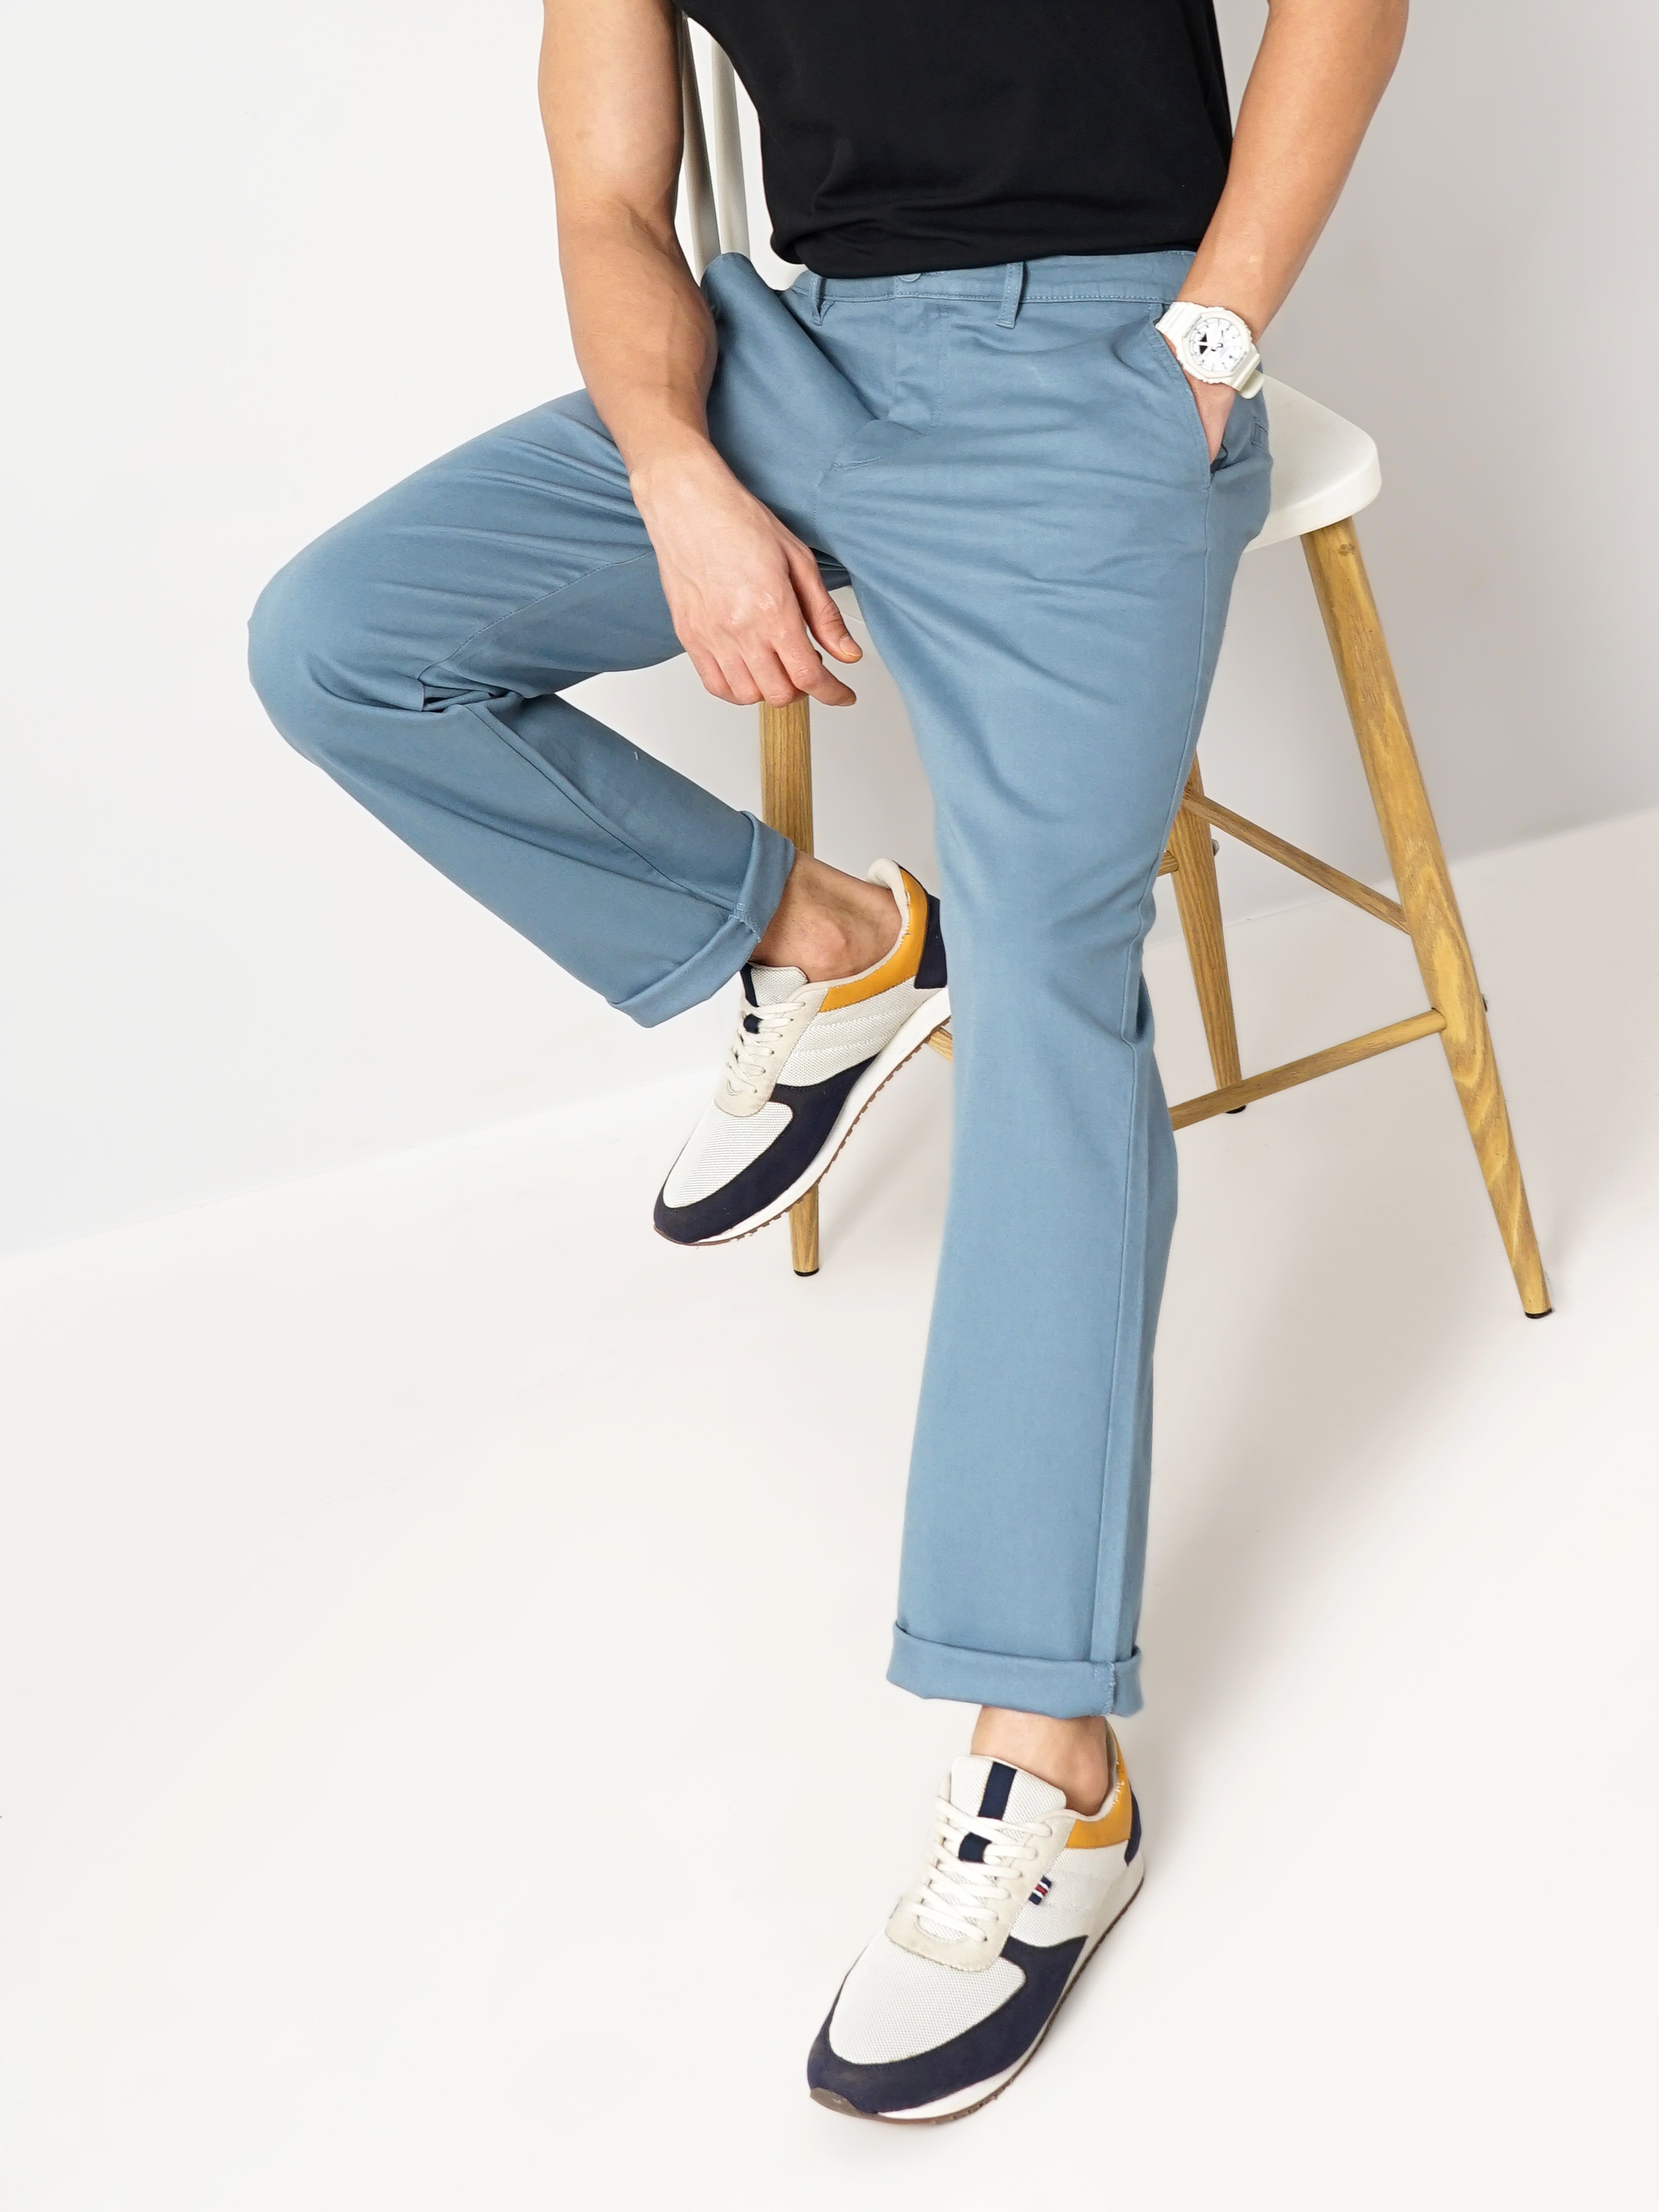 Celio Men Blue Solid Straight Fit Cotton Chino Casual Trouser